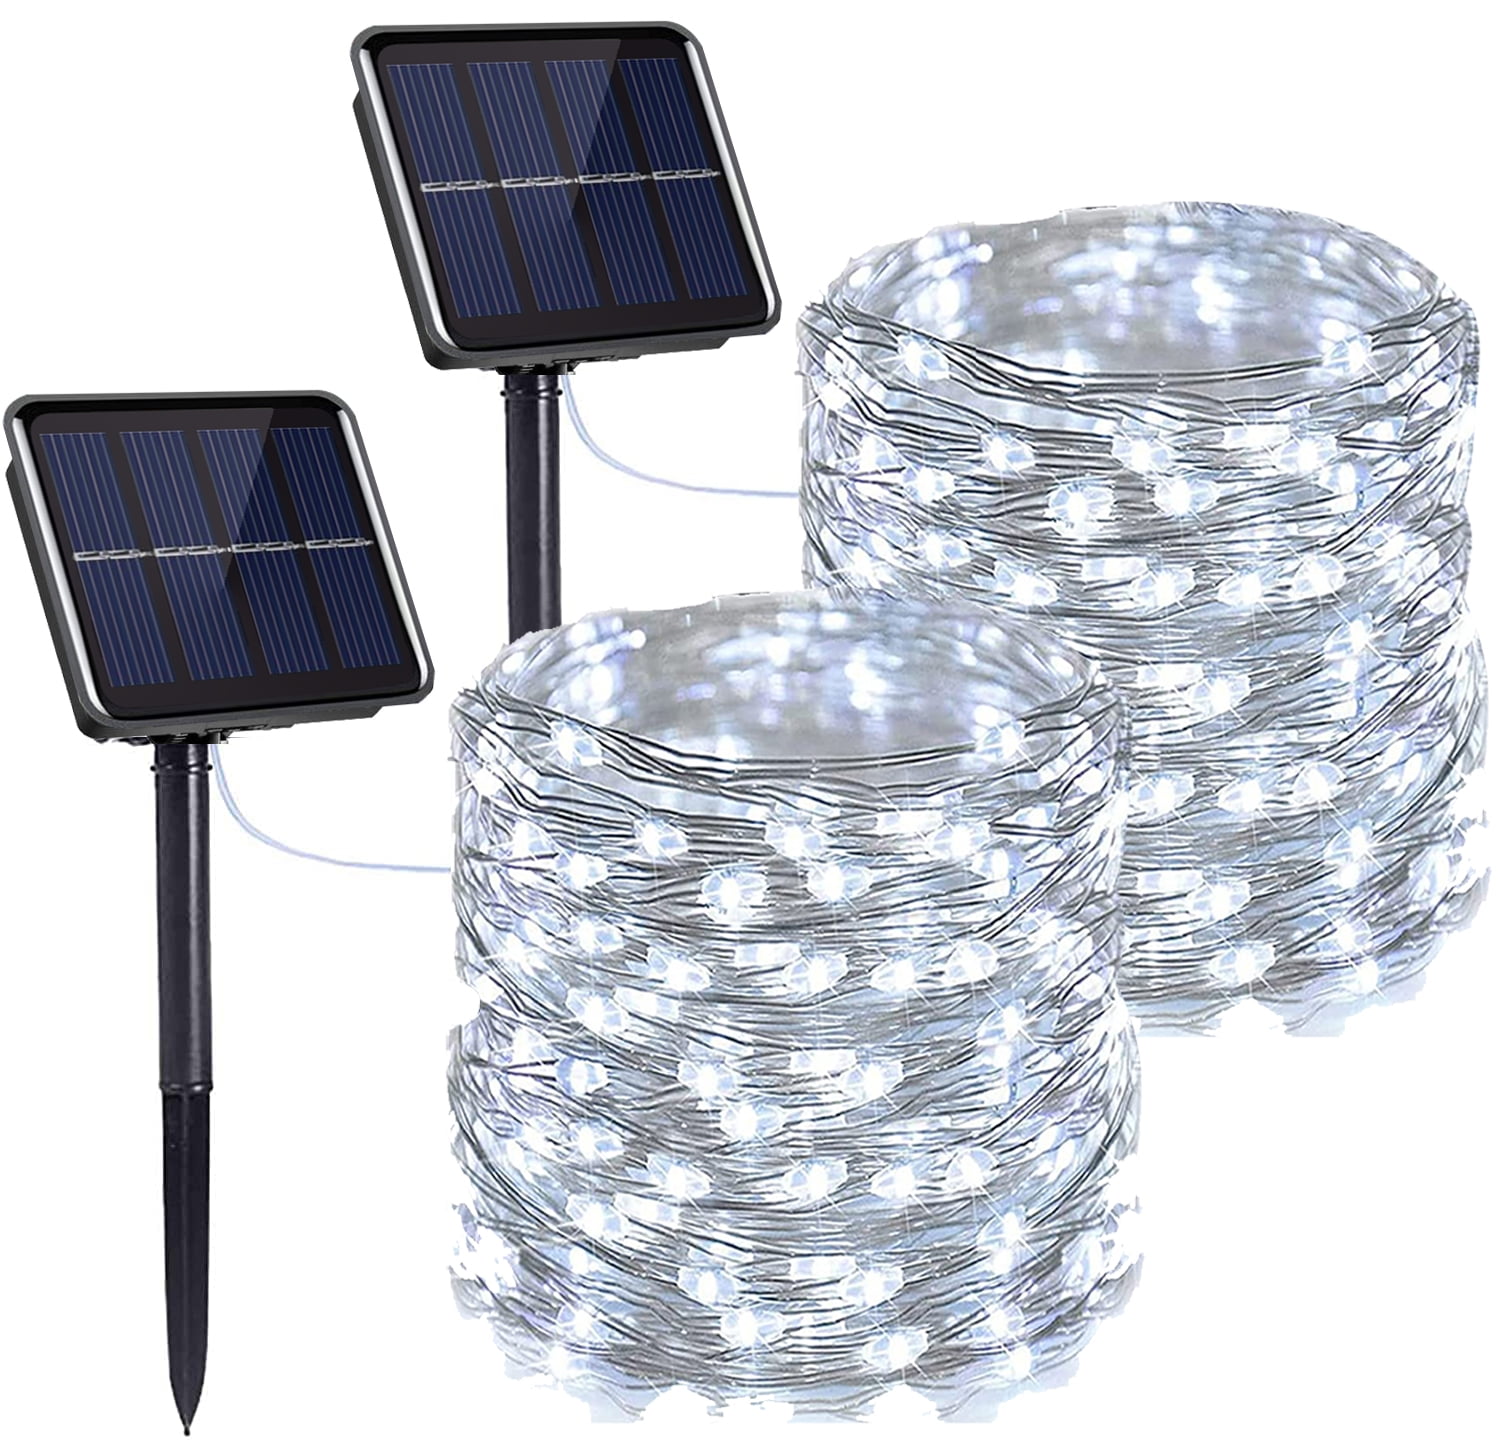 H-E-B Solar-Power LED String Lights - Shop Seasonal Decor at H-E-B